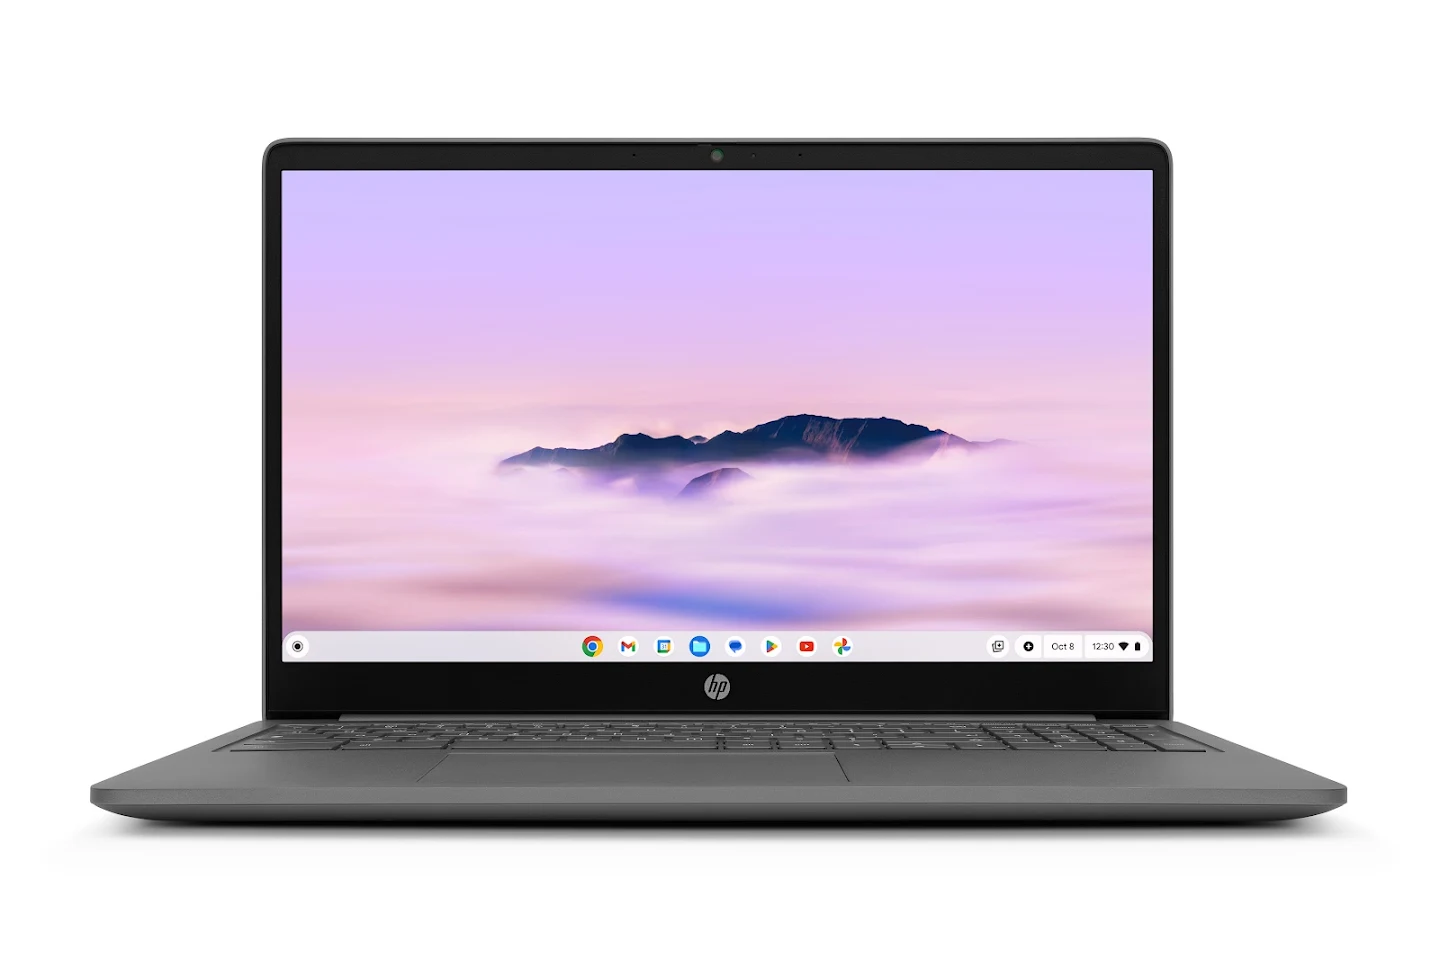 The big HP Chromebook Plus laptop gets a big 50% discount